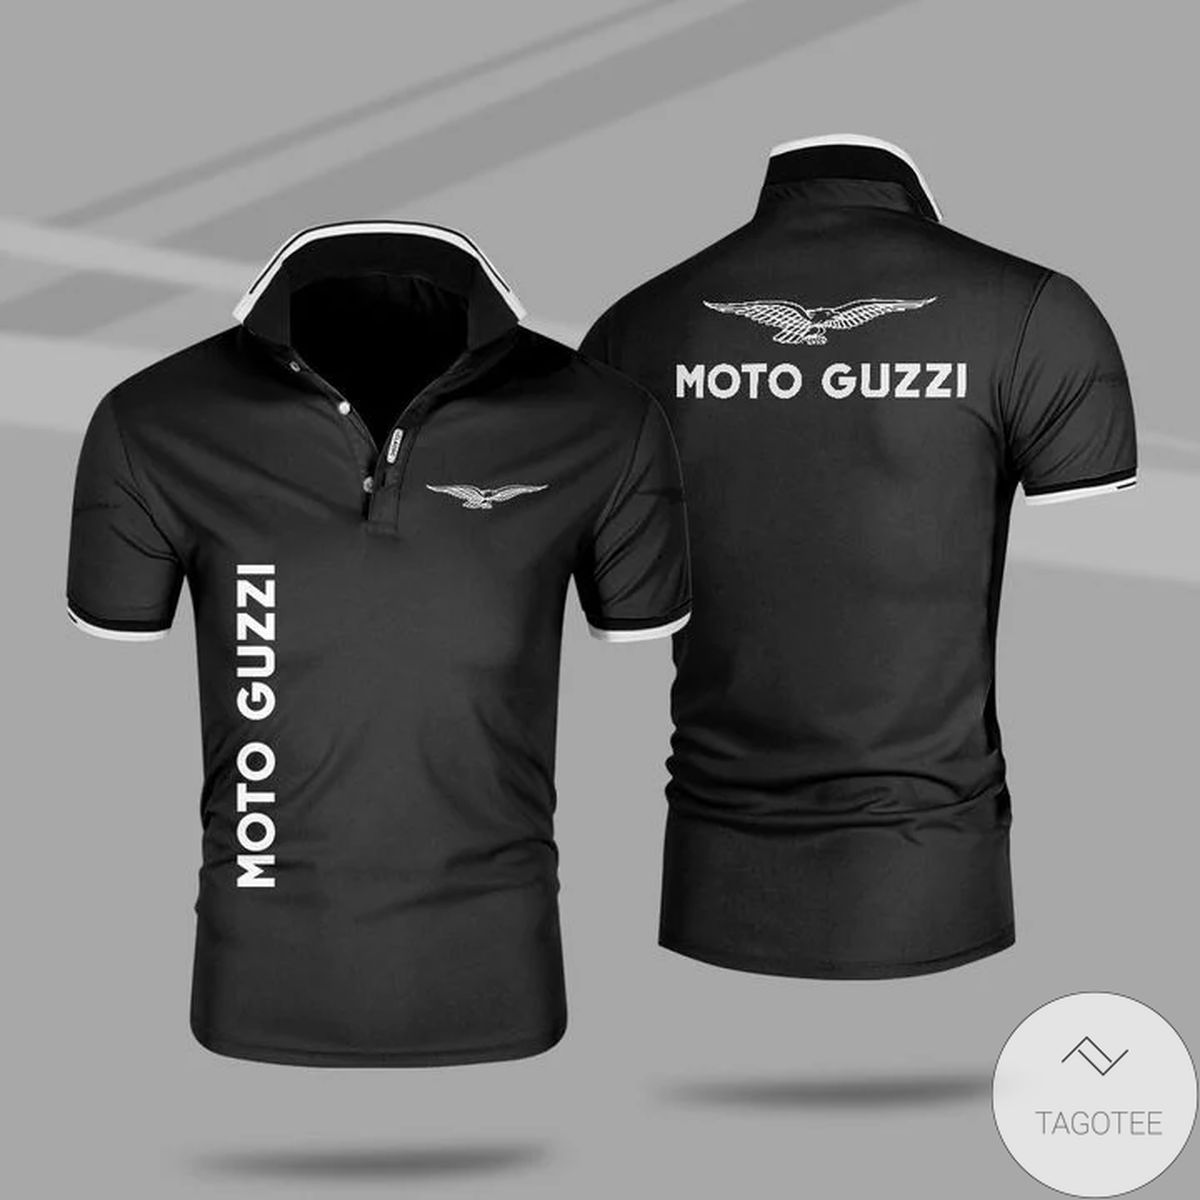 Moto Guzzi Polo Shirt